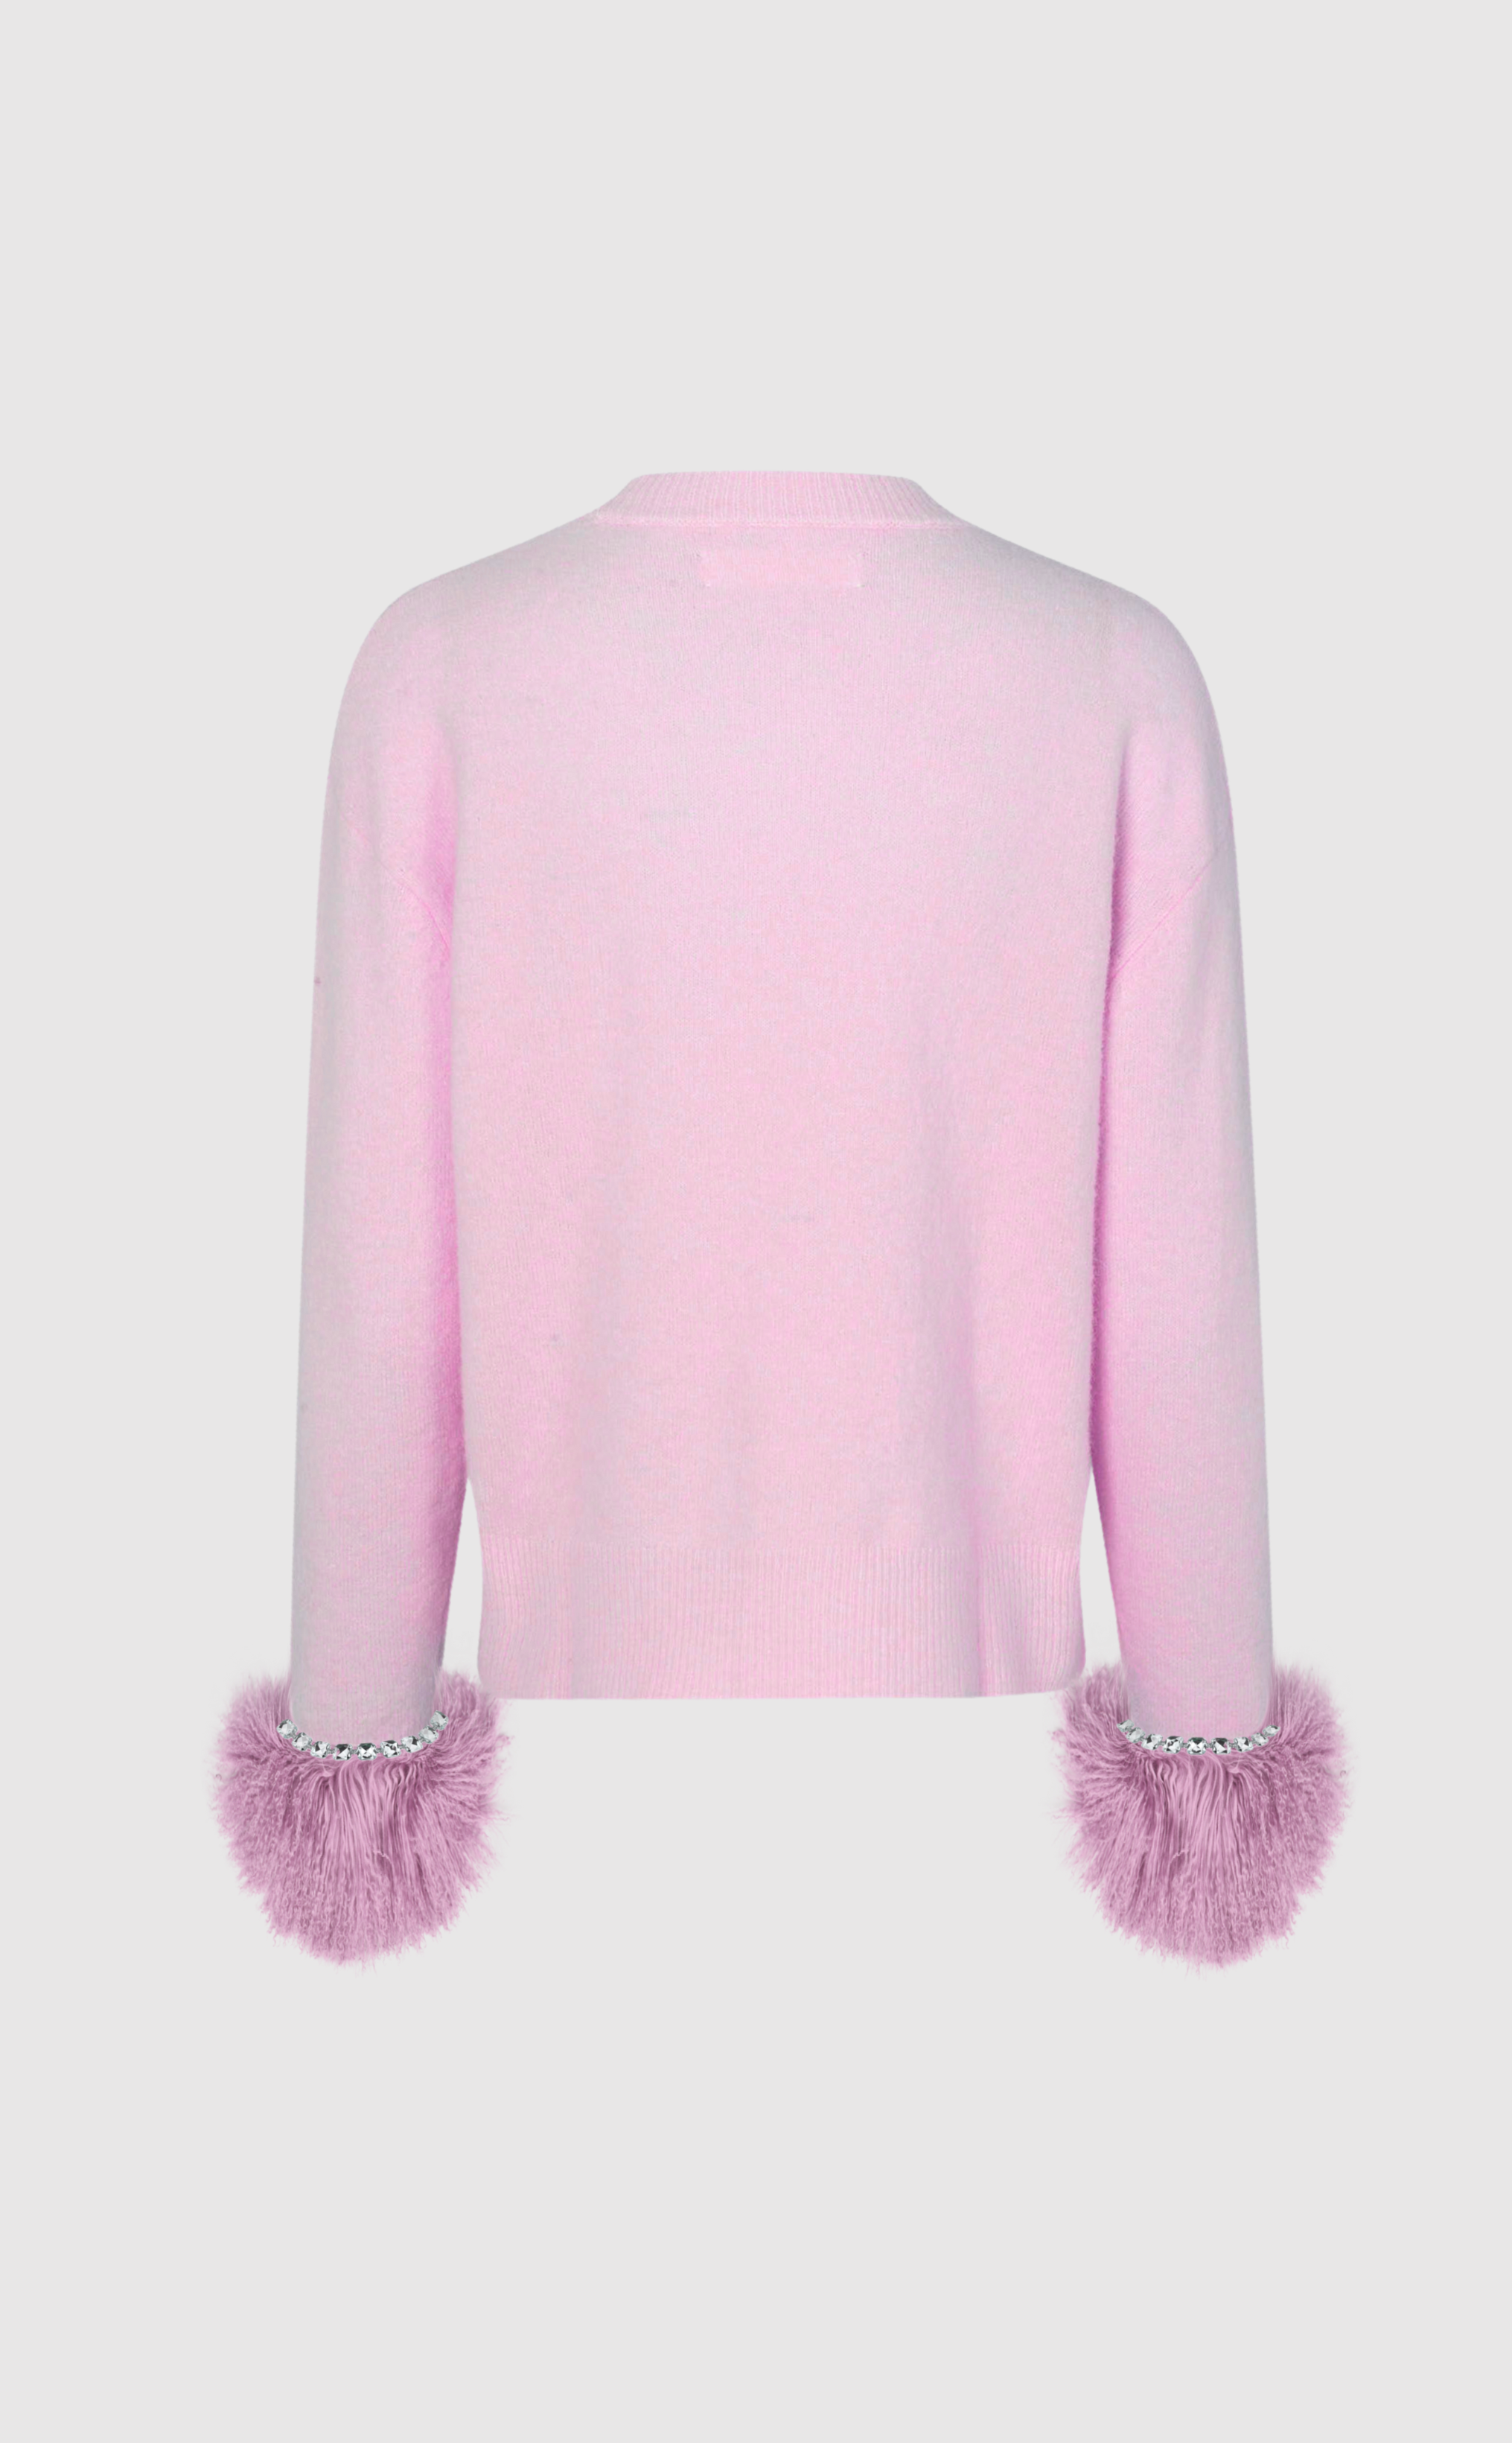 Gigi long sleeve sweater in pink